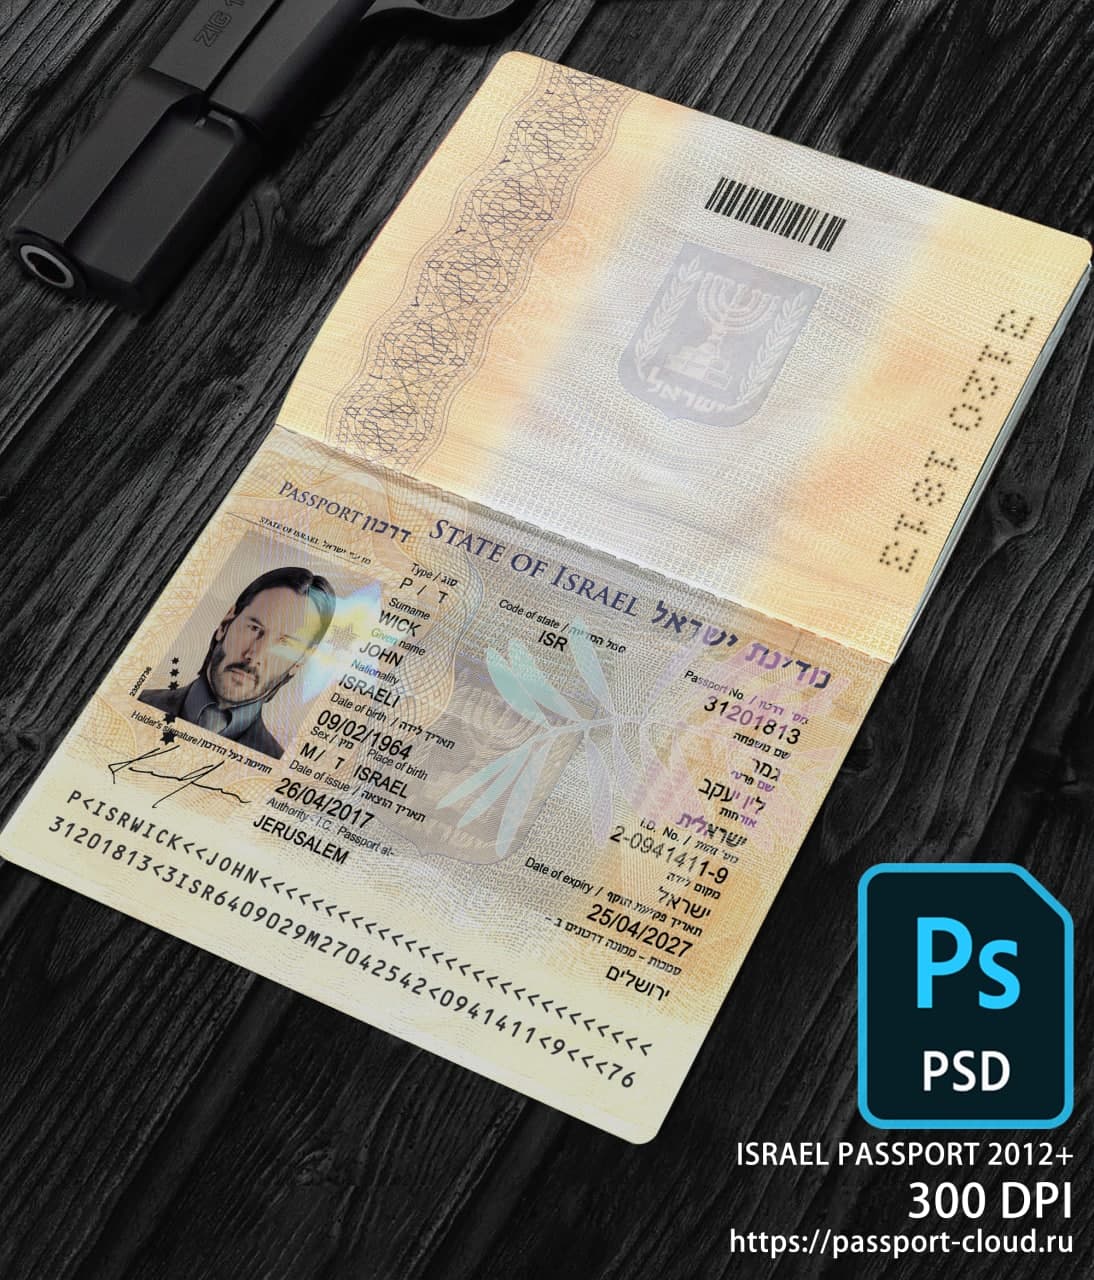 Israel Passport 2012+ PSD1